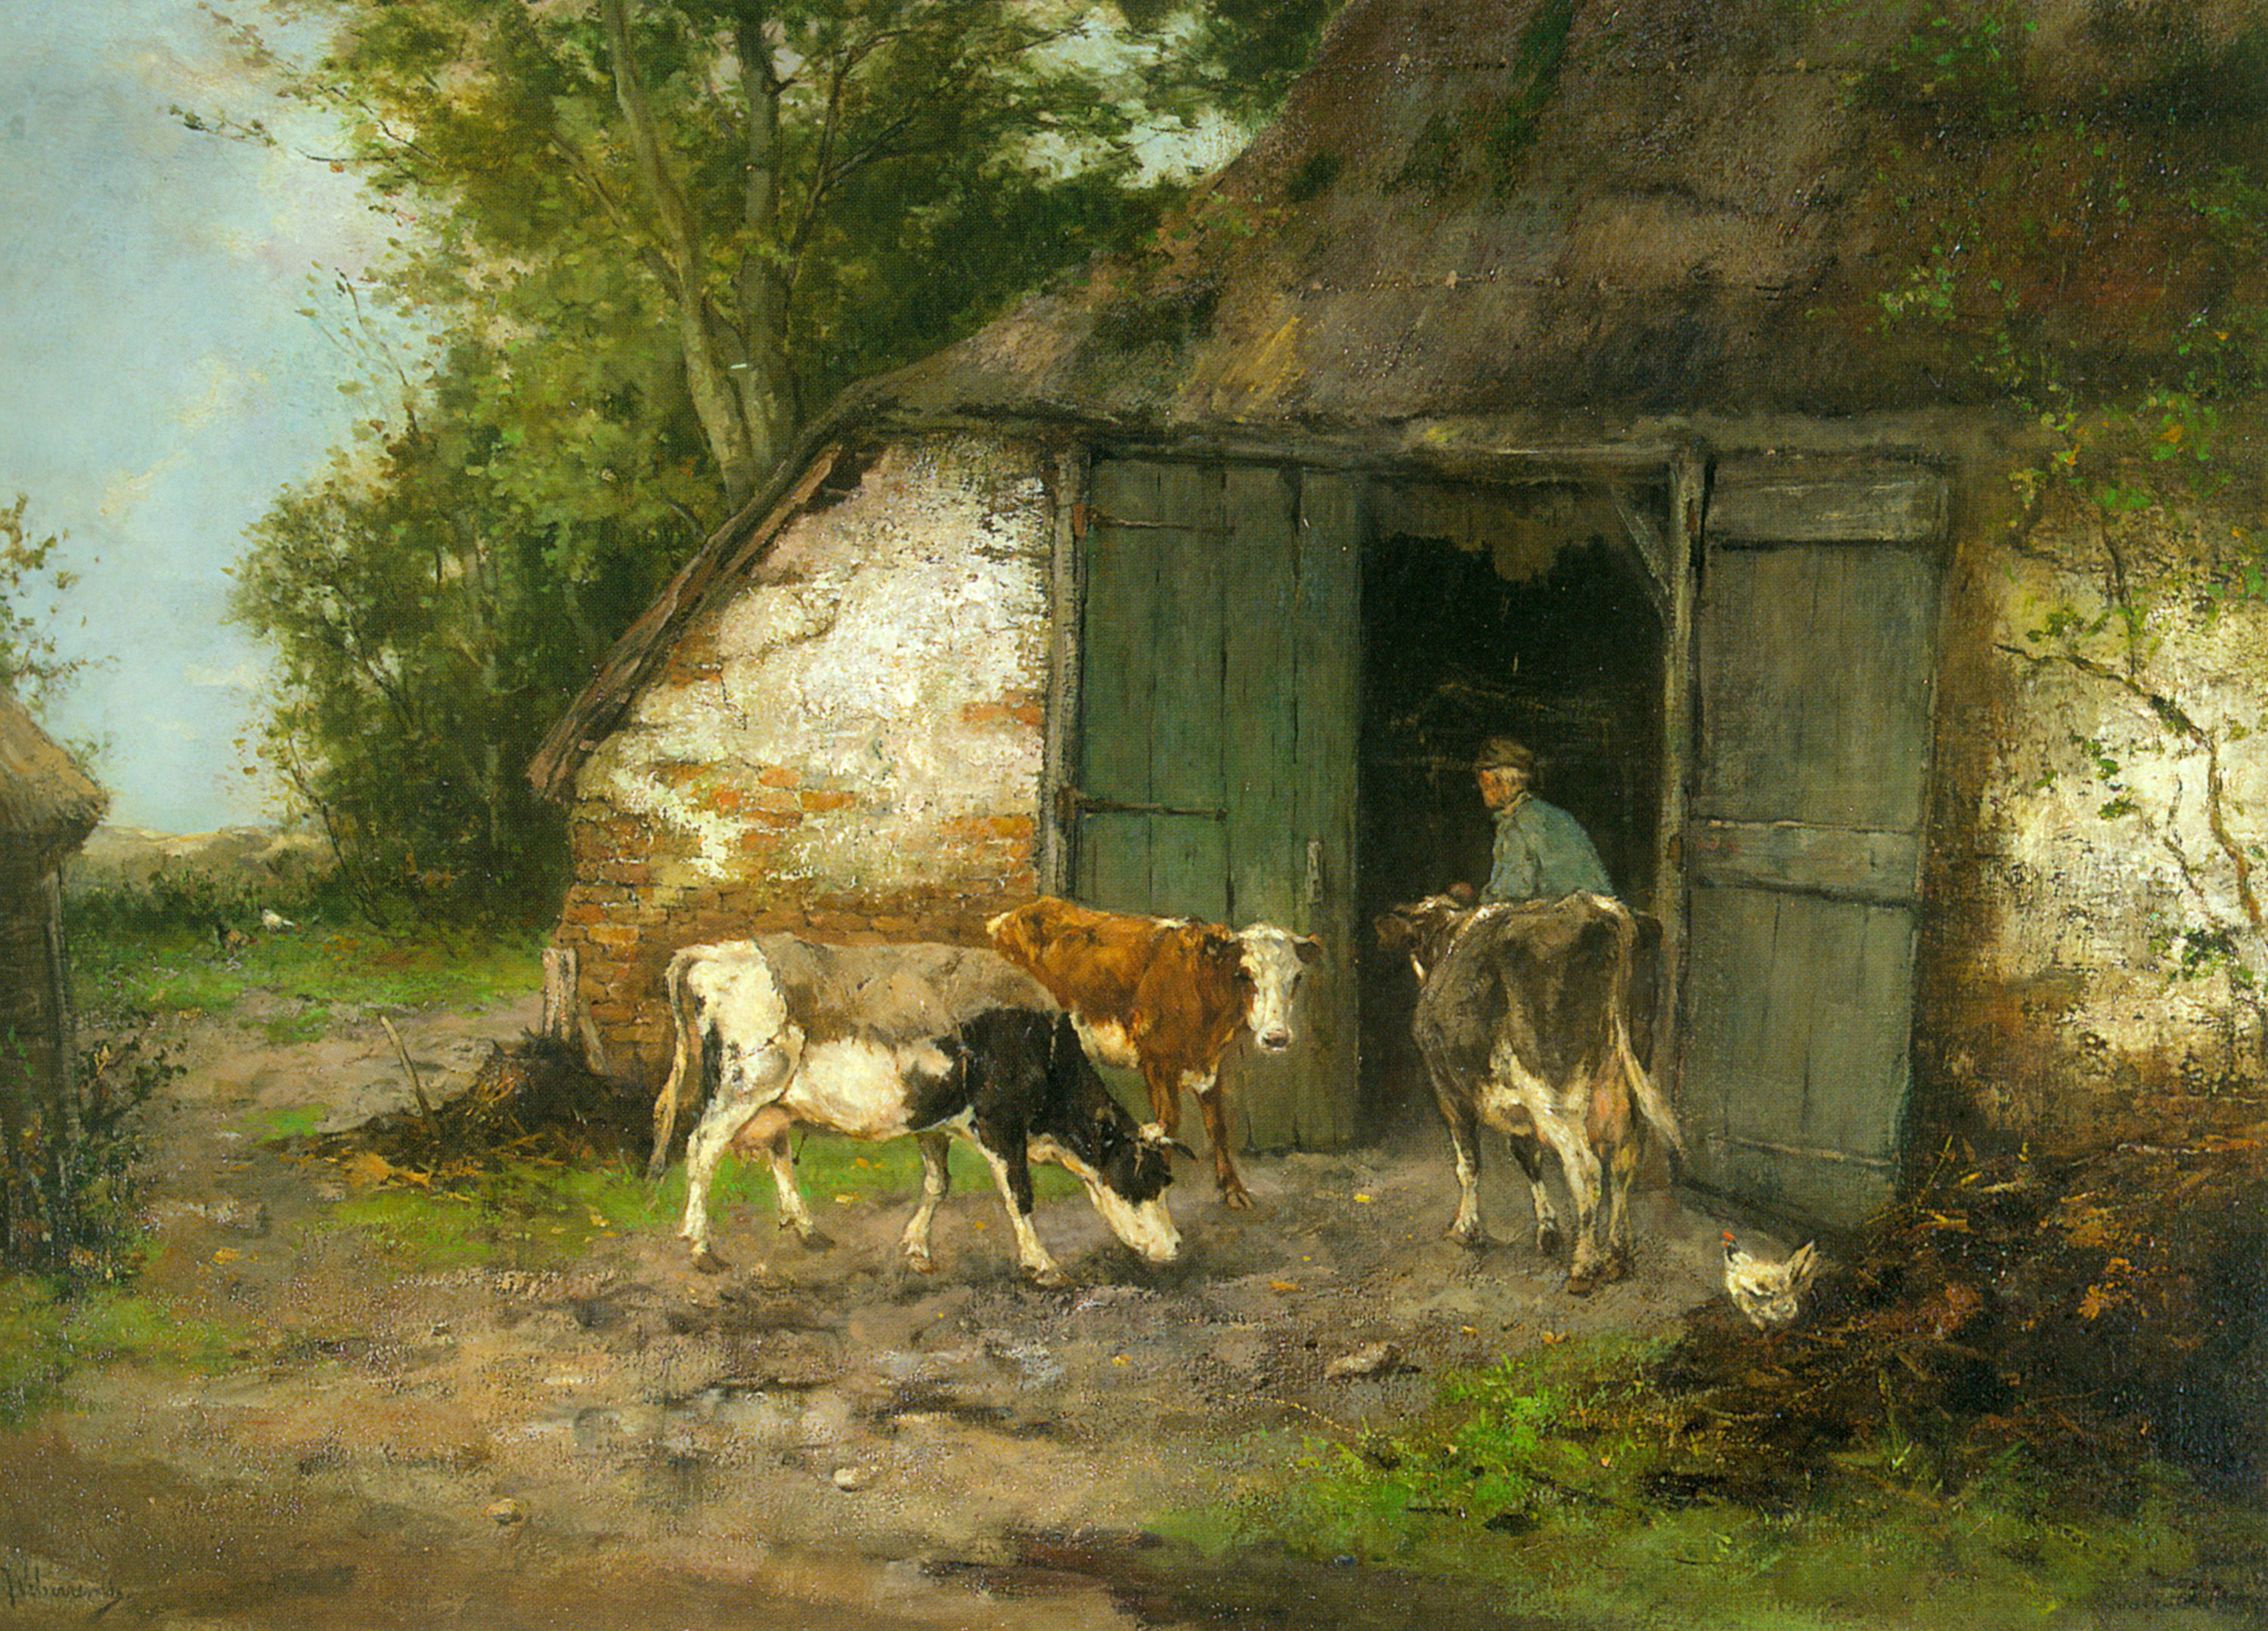 Farmer and Cattle by a Stable by Johan Frederik Cornelis Scherrewitz